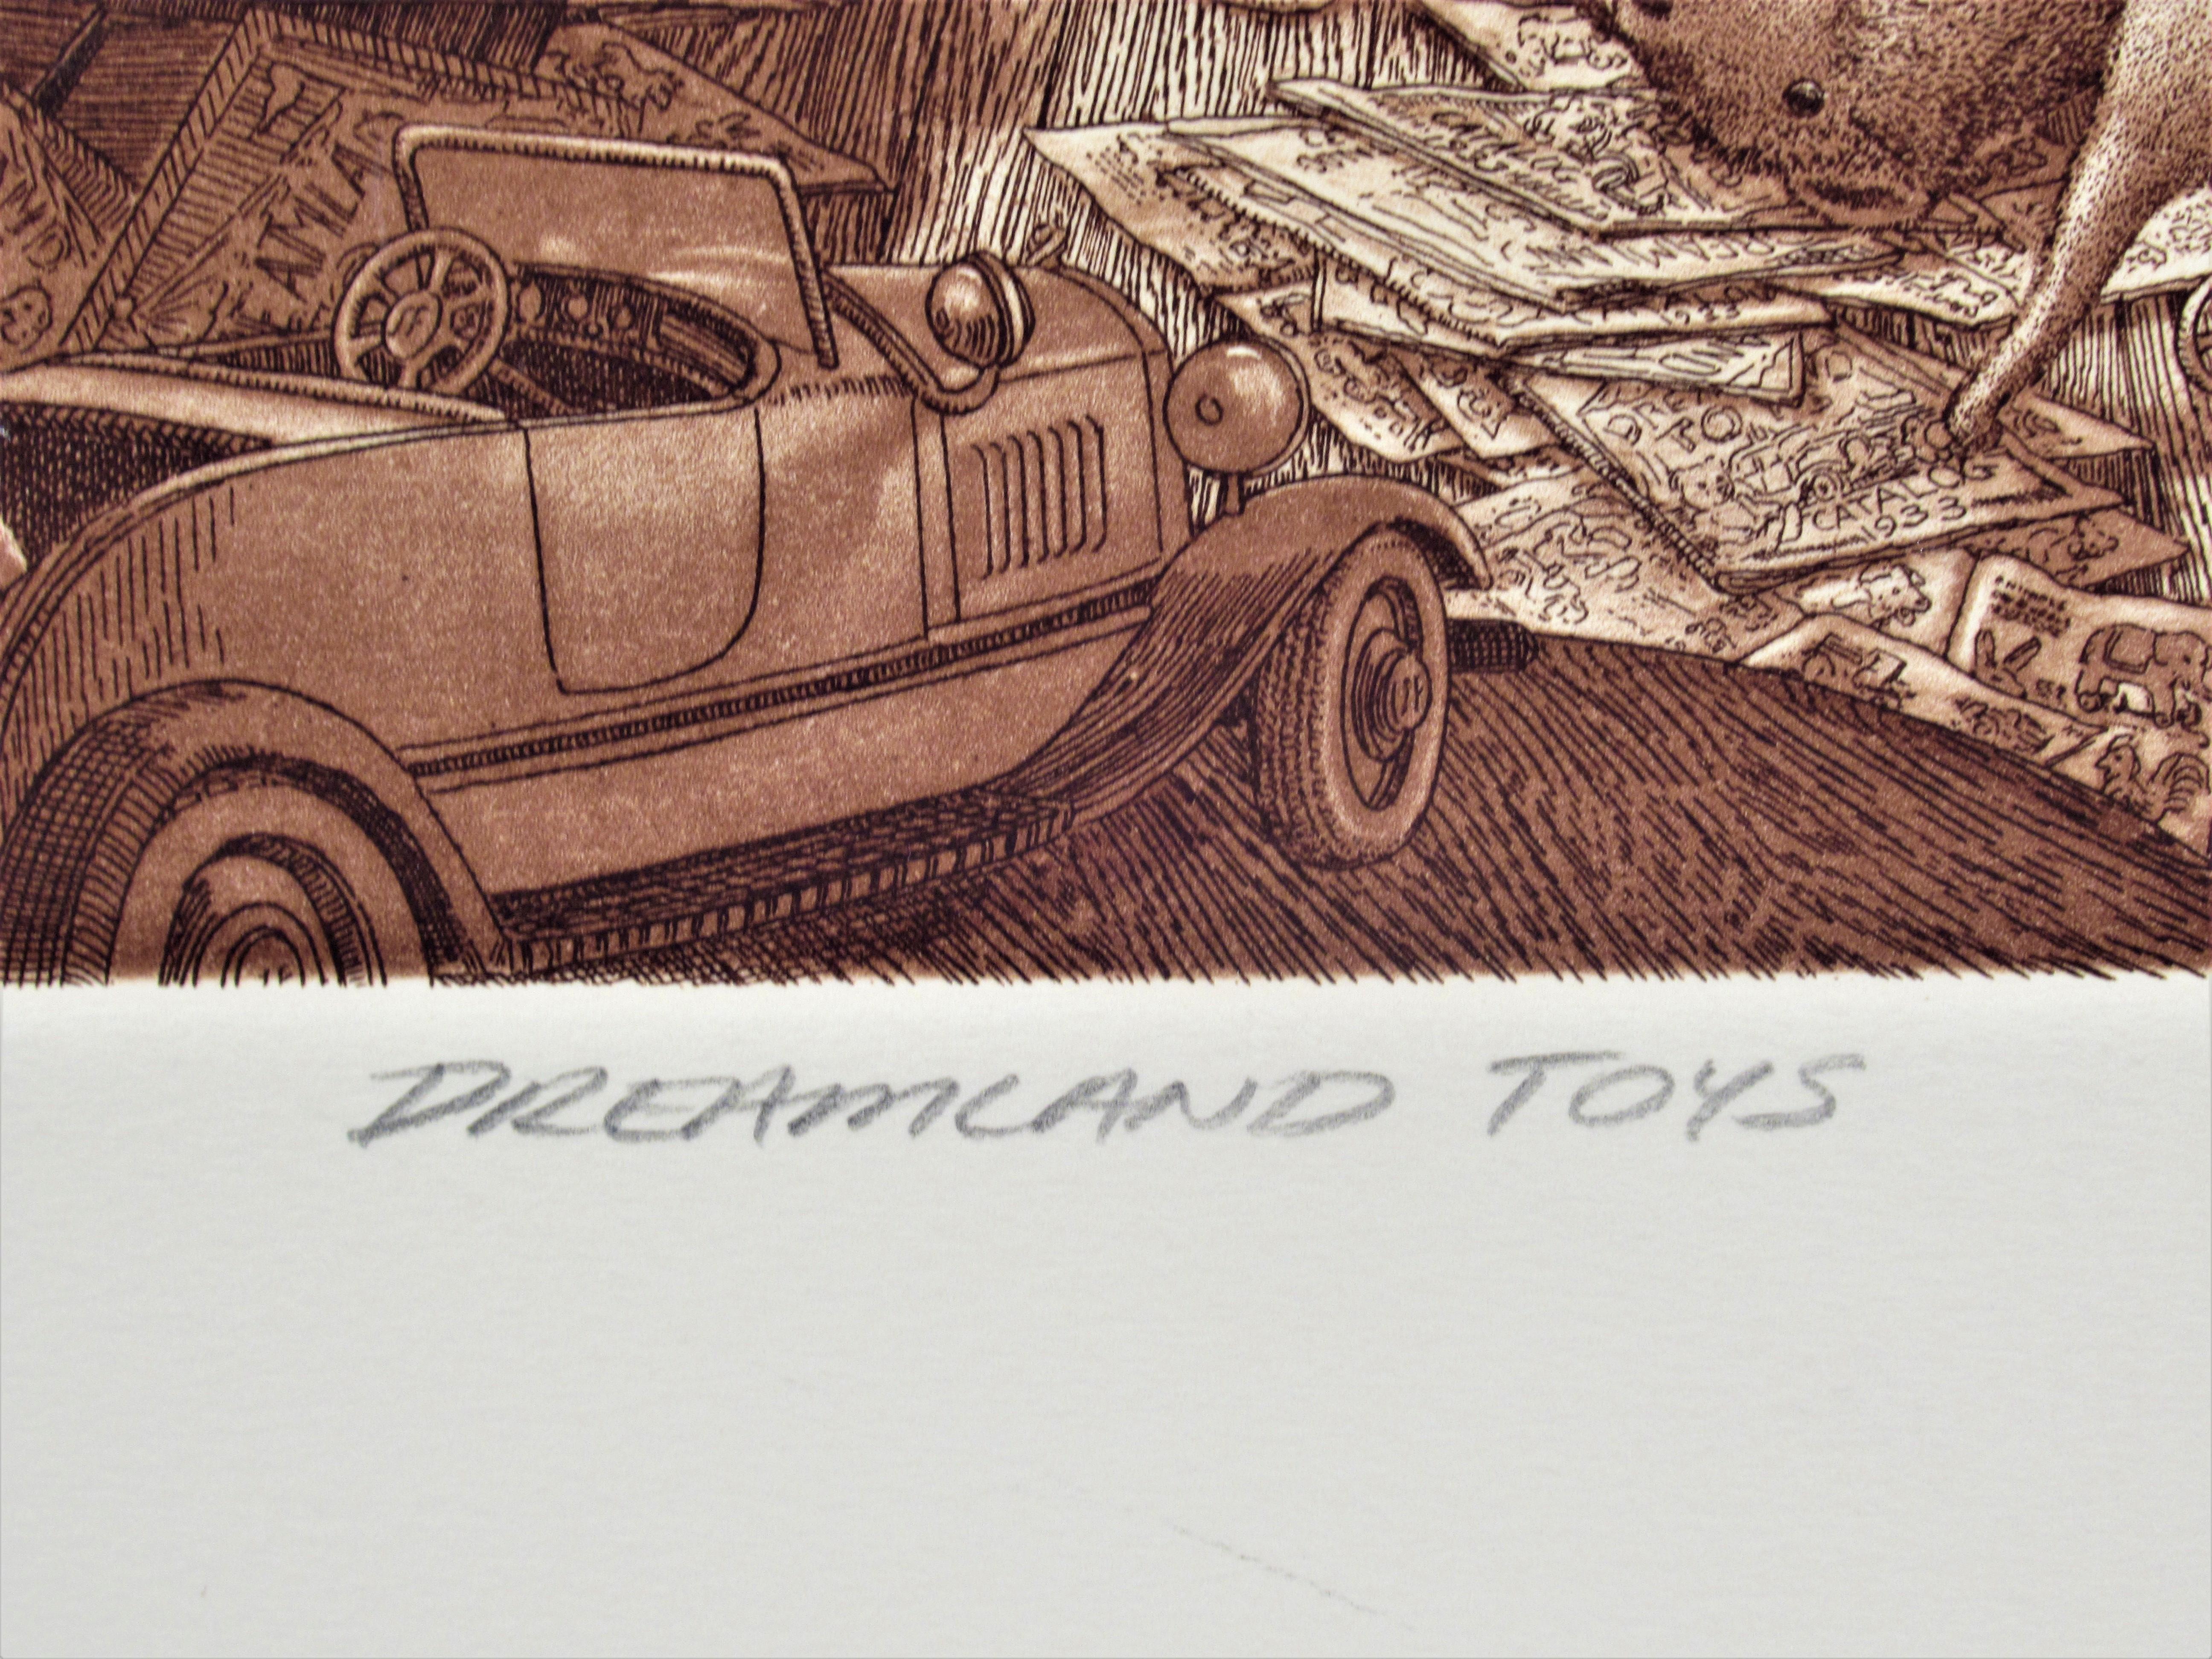 Dreamland Toys - Gray Interior Print by Scott Fitzgerald